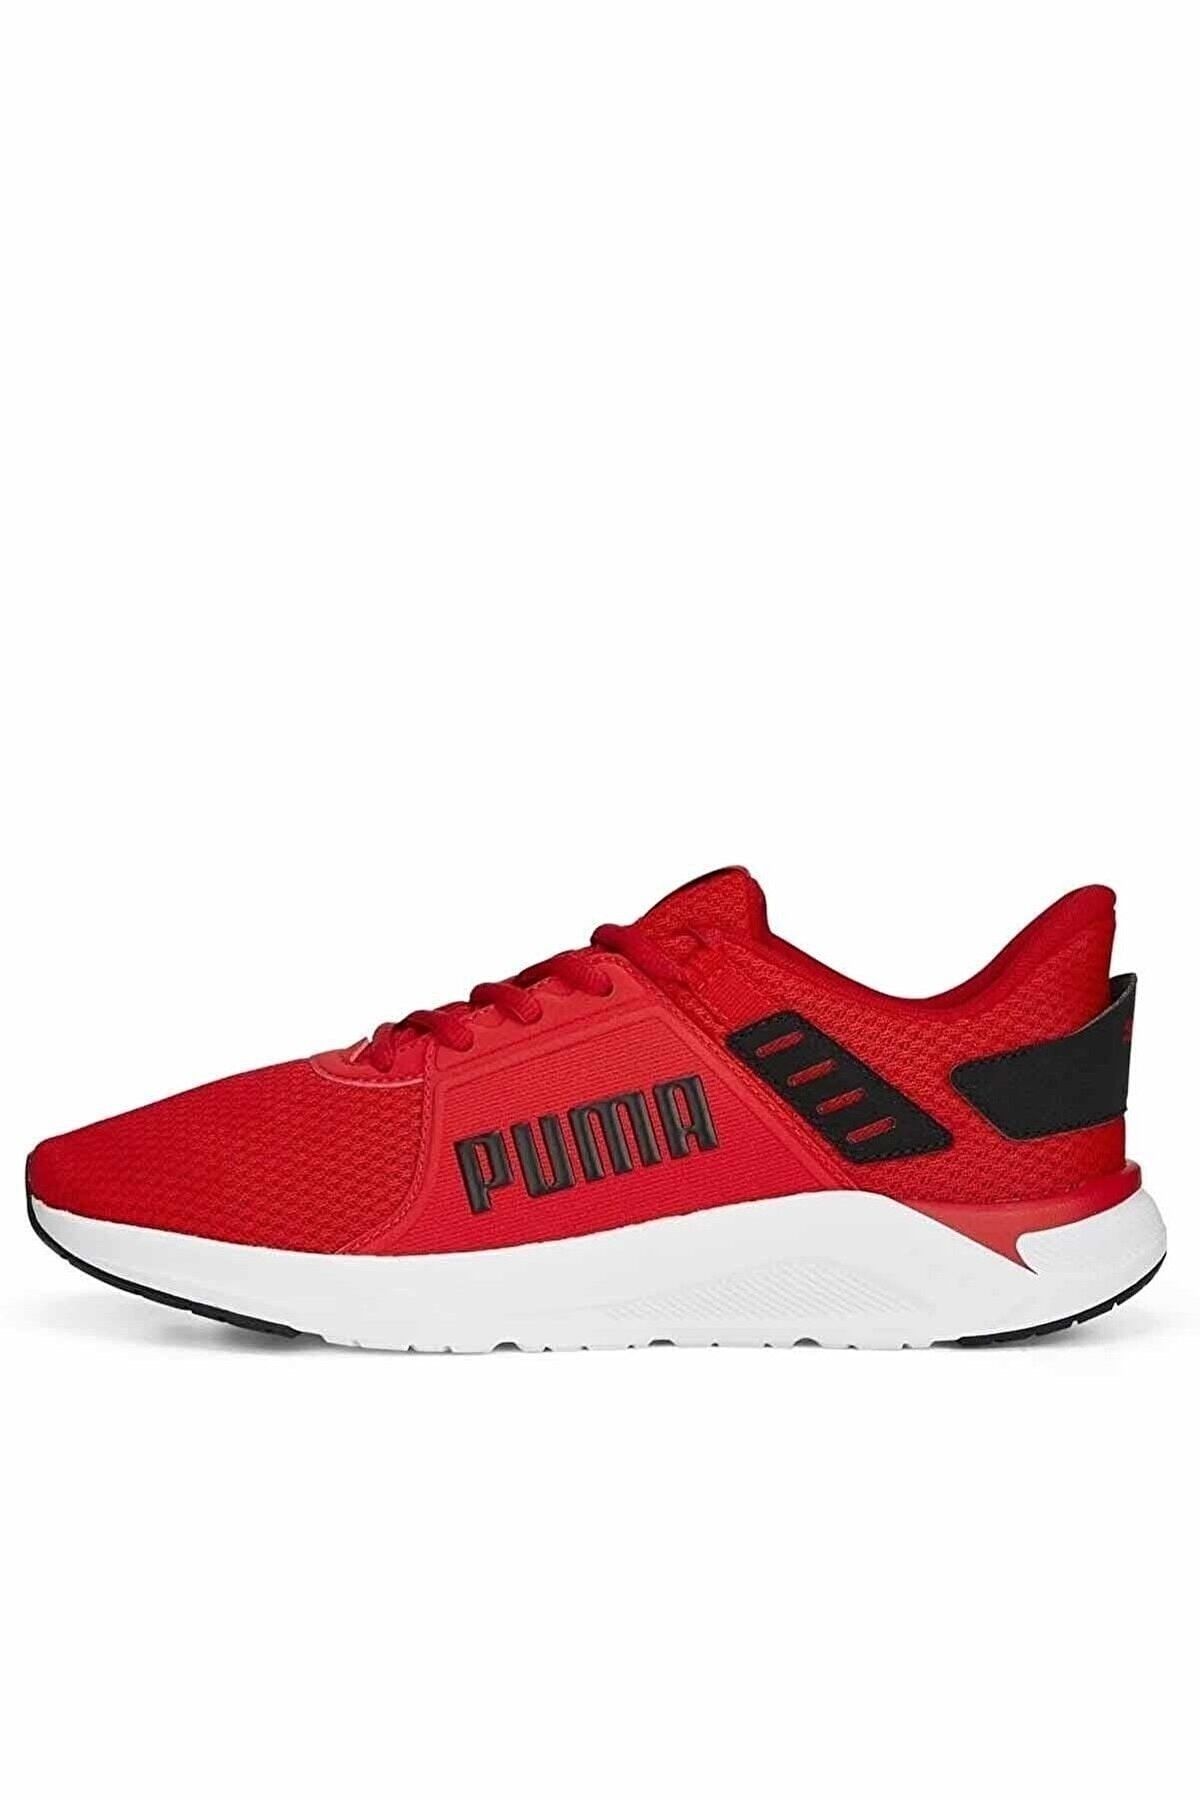 Puma 377729 04 FTR Connect For All Time Red-Black Günlük Spor Ayakkabı